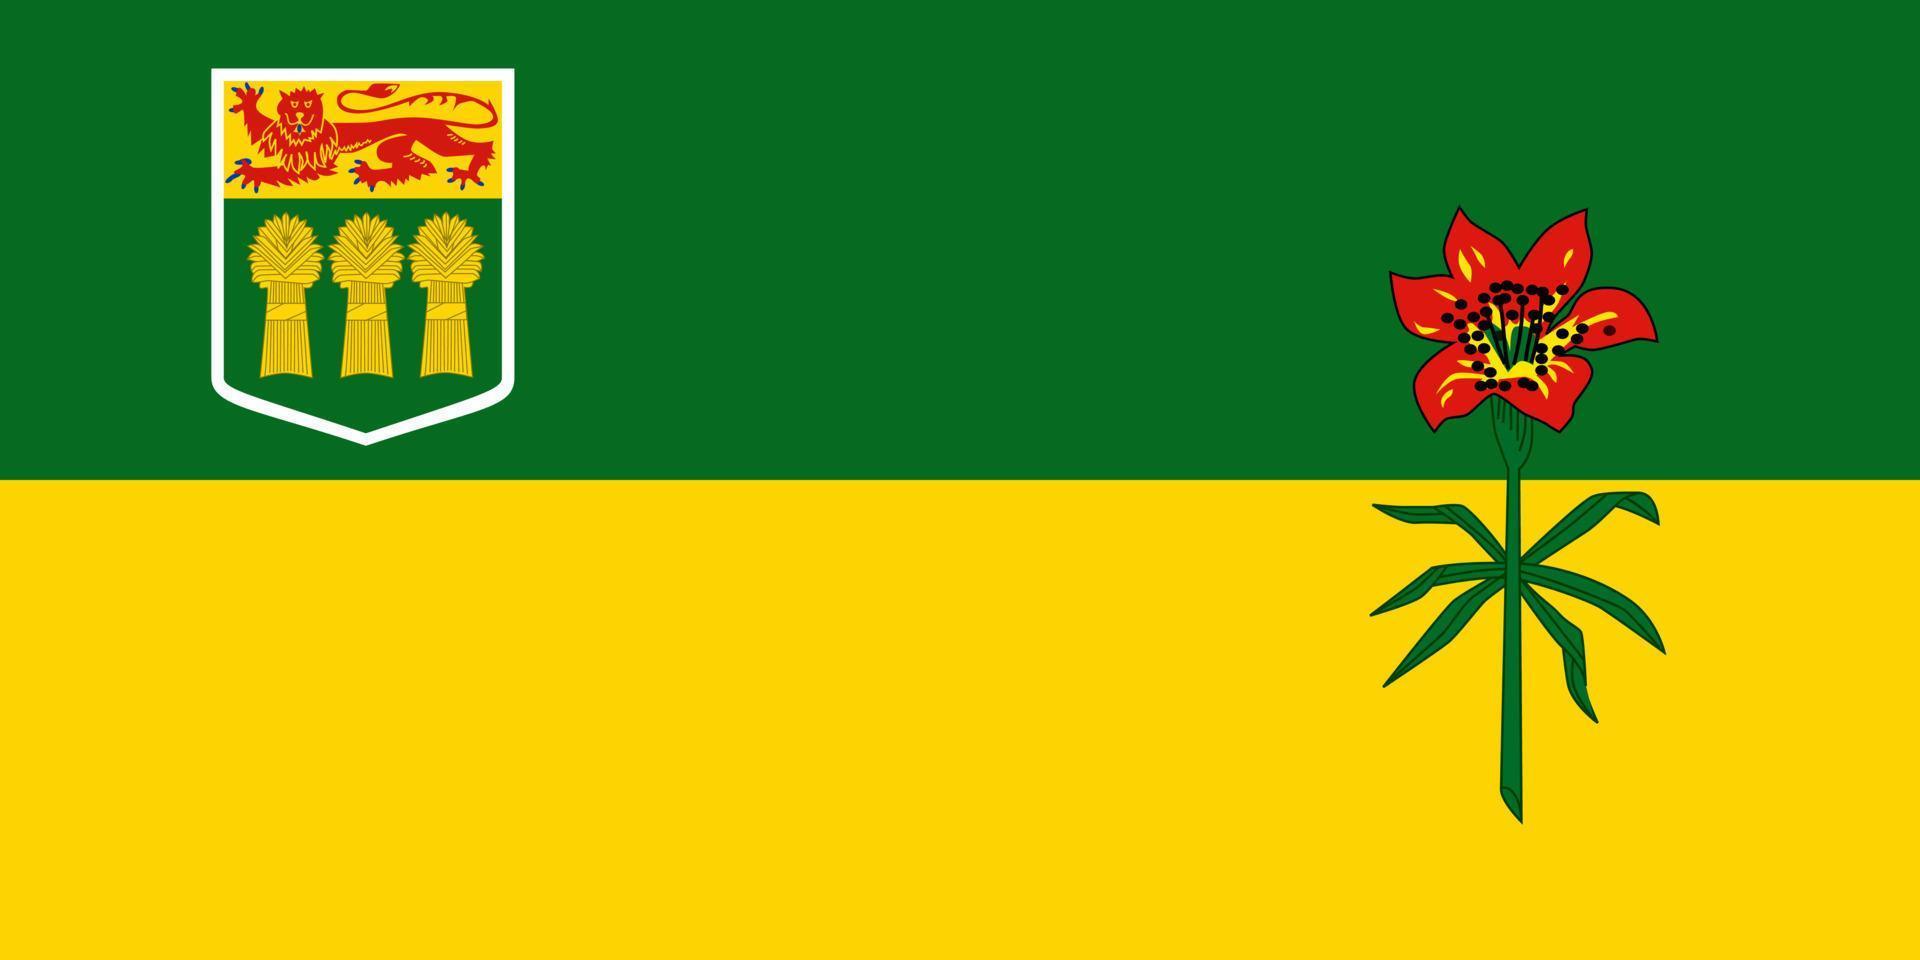 saskatchewan flagga, provins av Kanada. vektor illustration.